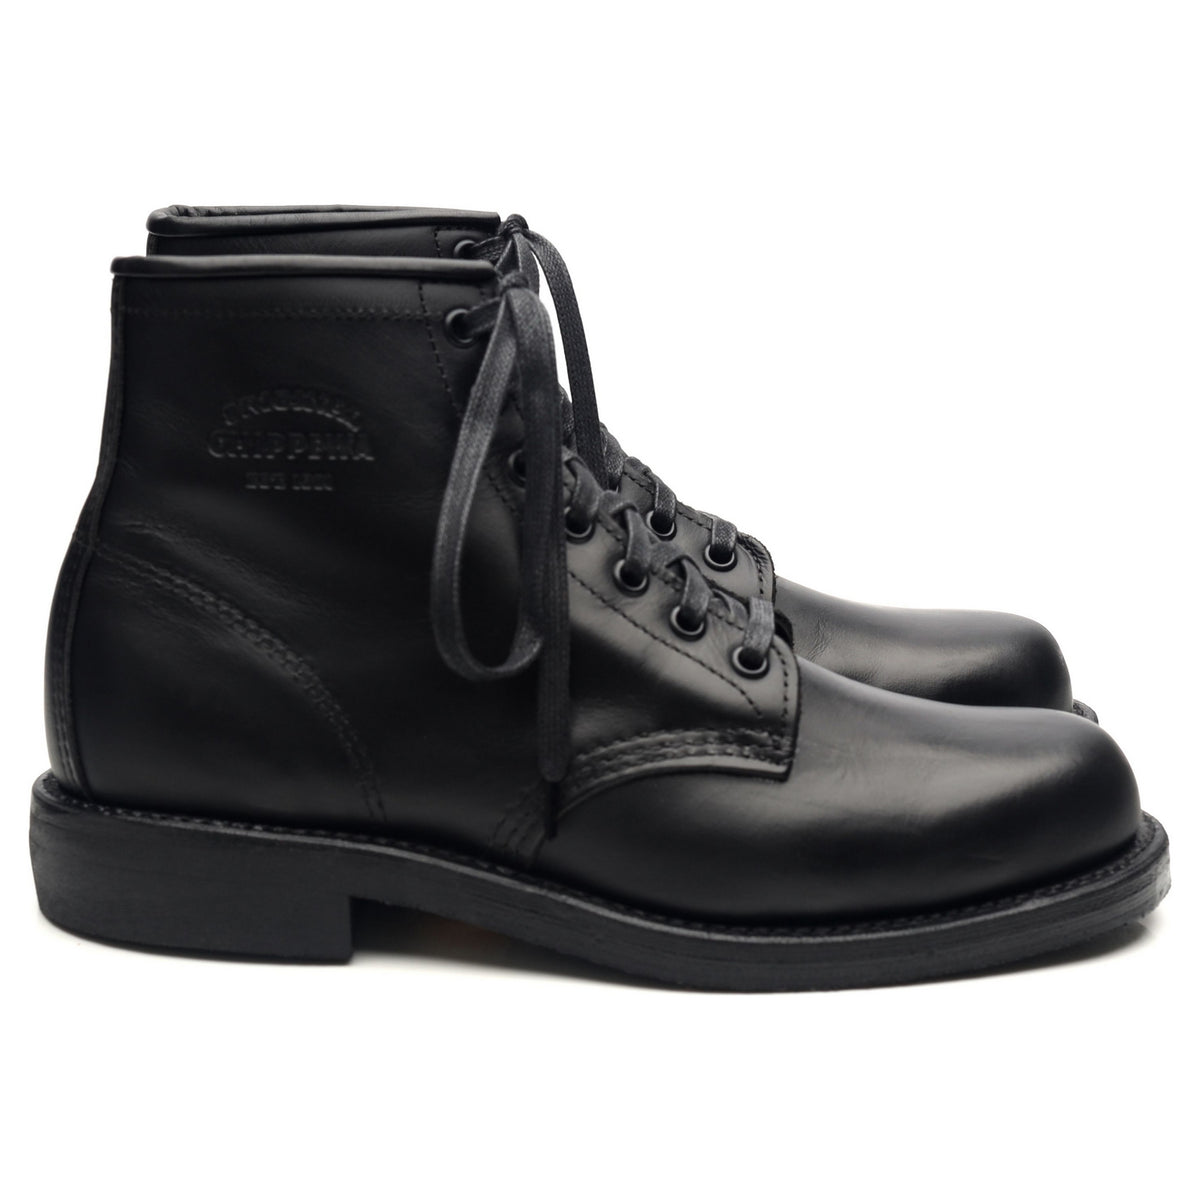 Black Leather Service Boots UK 6.5 US 7.5